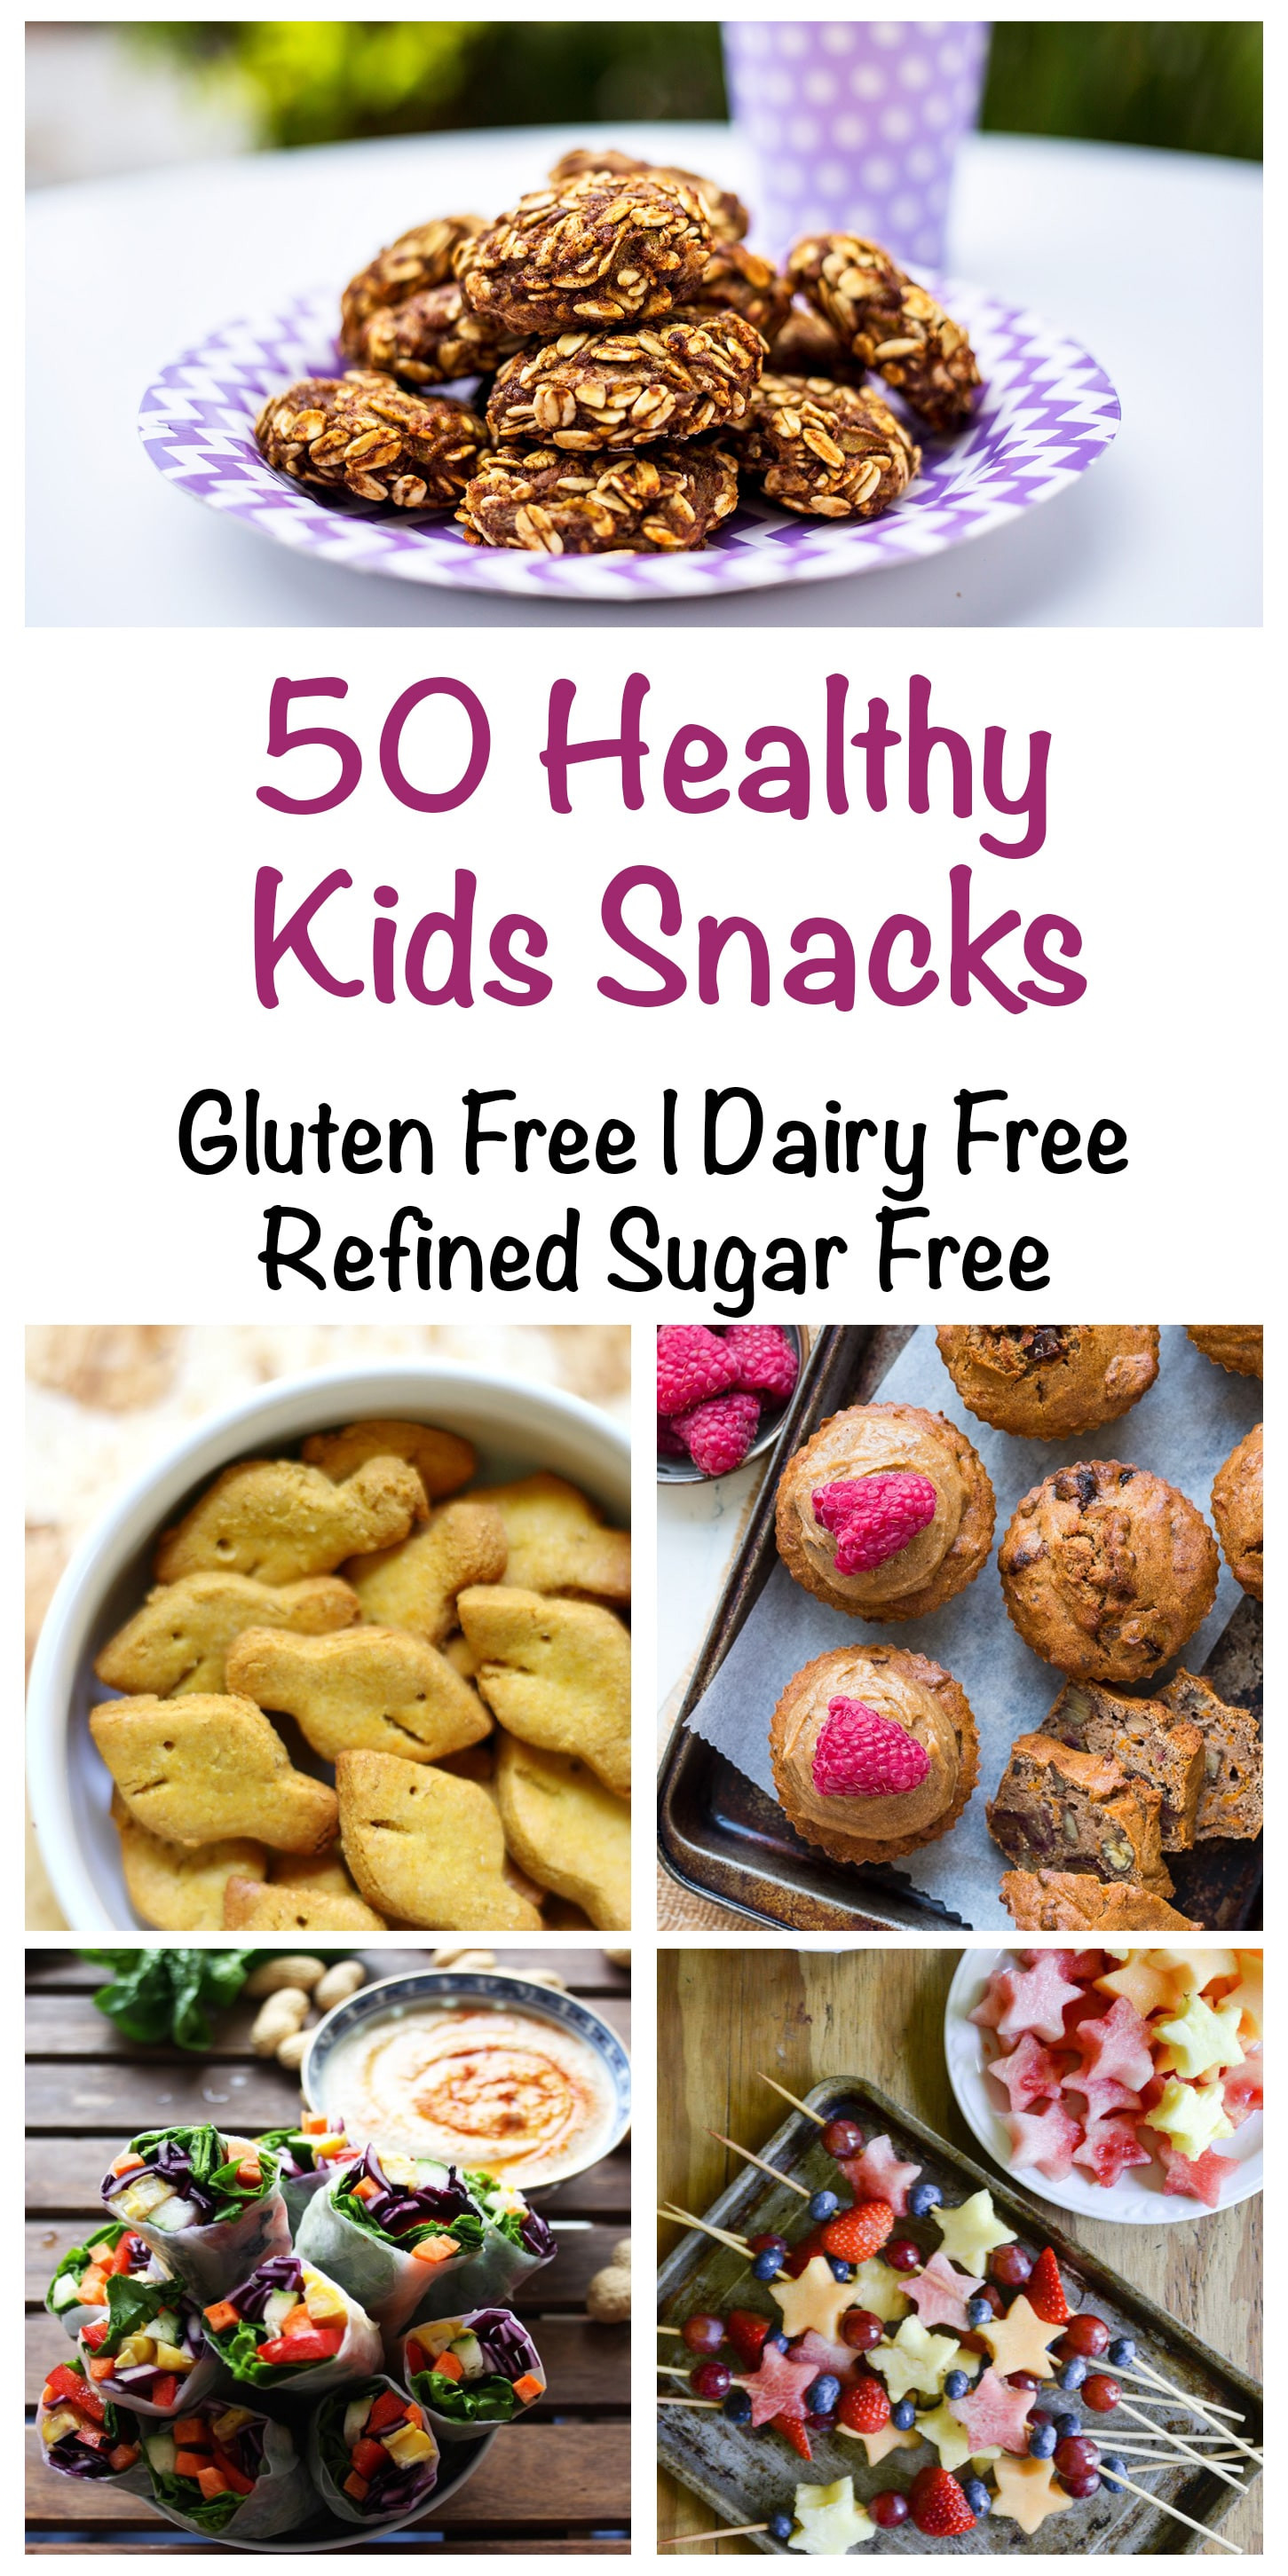 Healthy Gluten Free Snacks
 50 Healthy Snacks for Kids Gluten Free Dairy Free